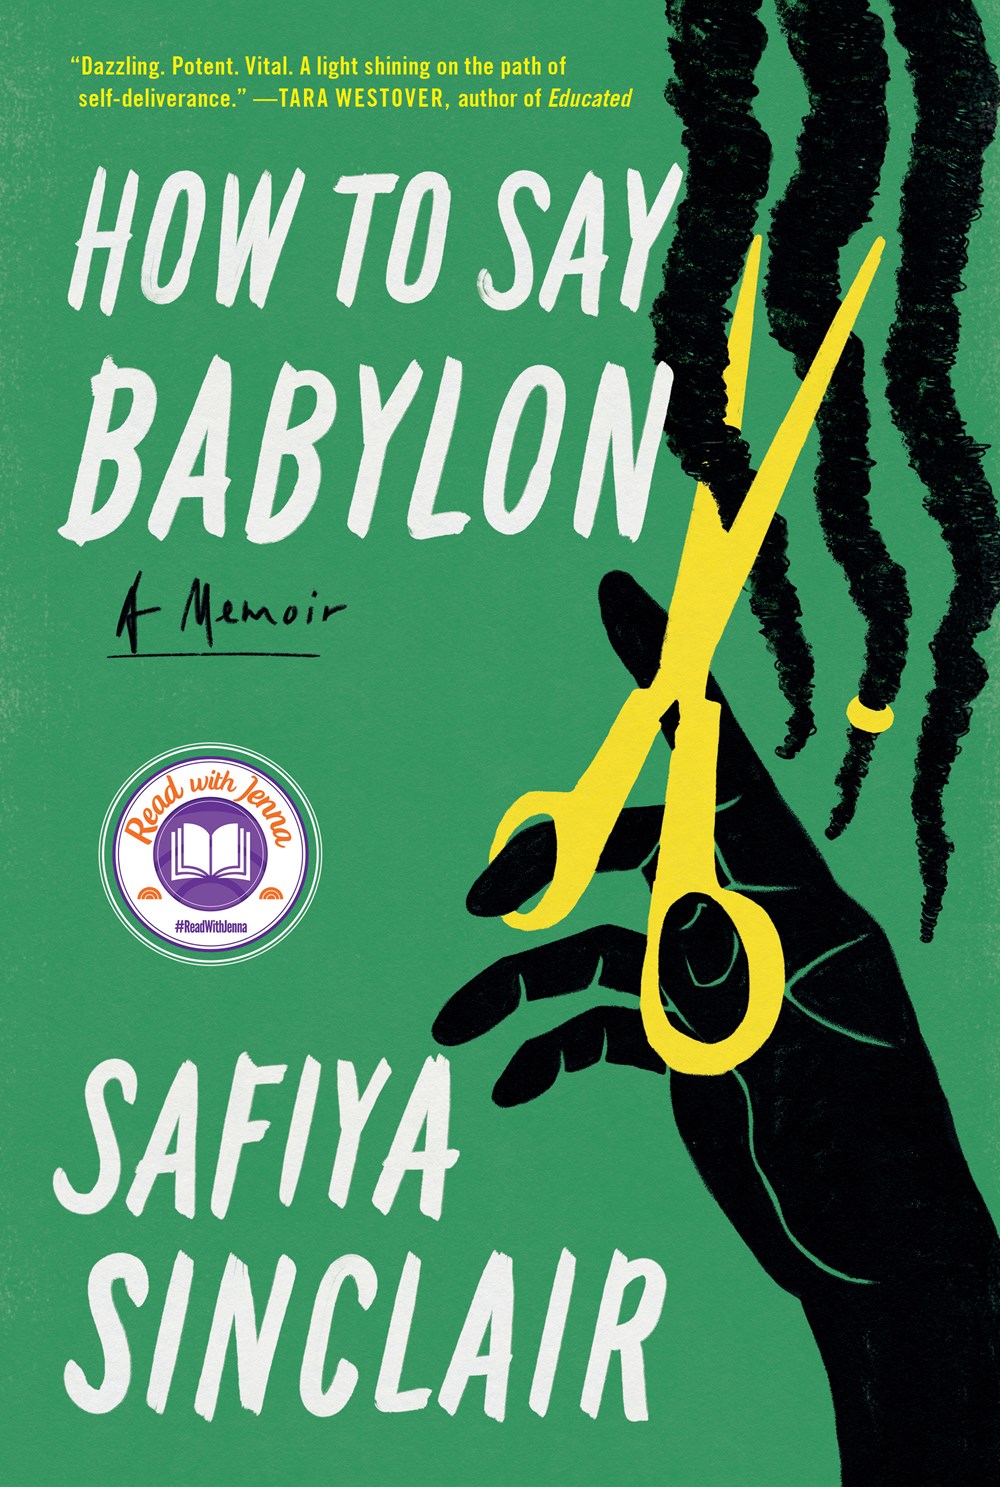 Read with Jenna Book Club Picks Safiya Sinclair’s ‘How To Say Babylon’ | Book Pulse